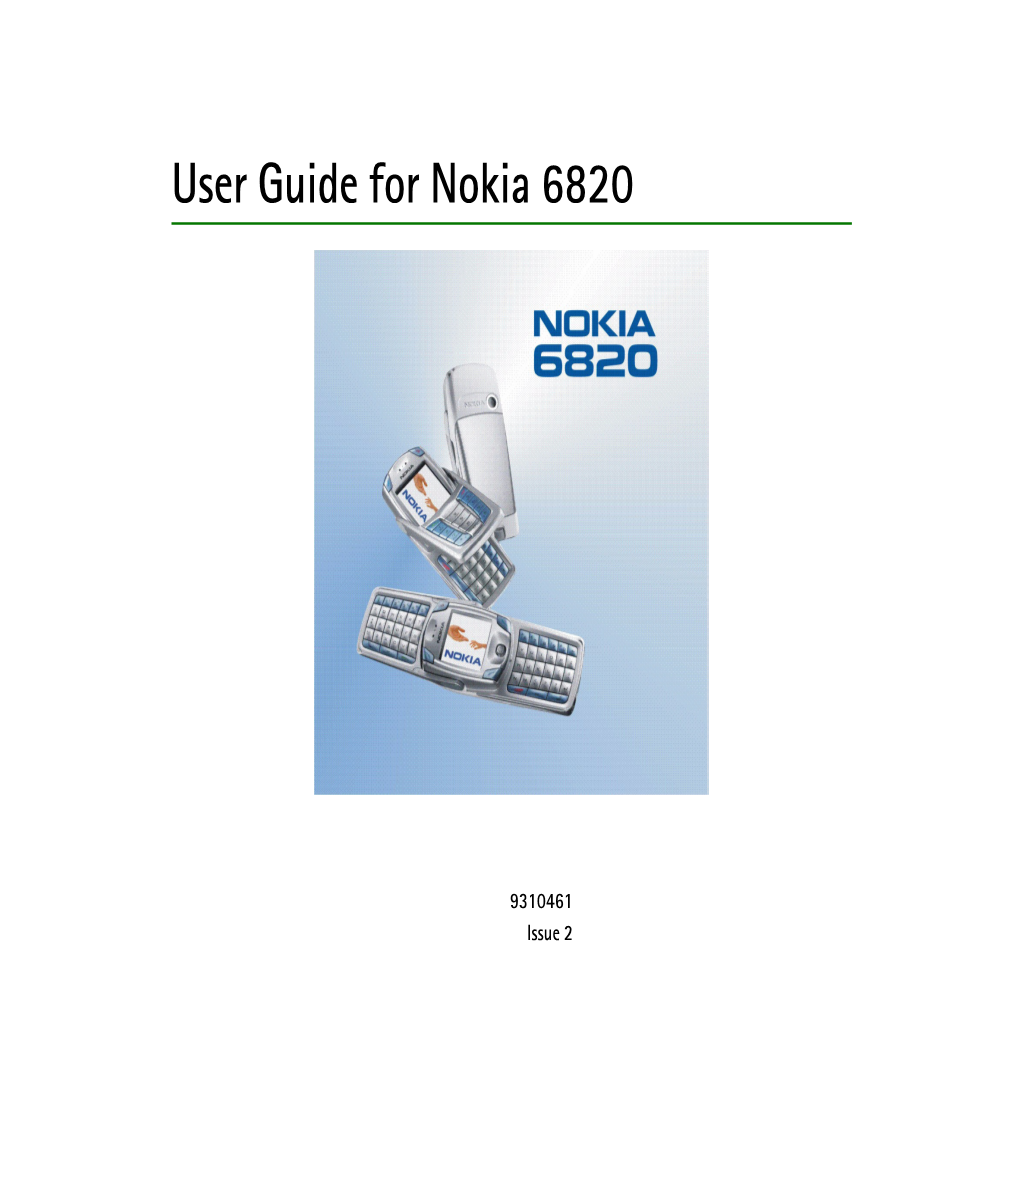 User Guide for Nokia 6820